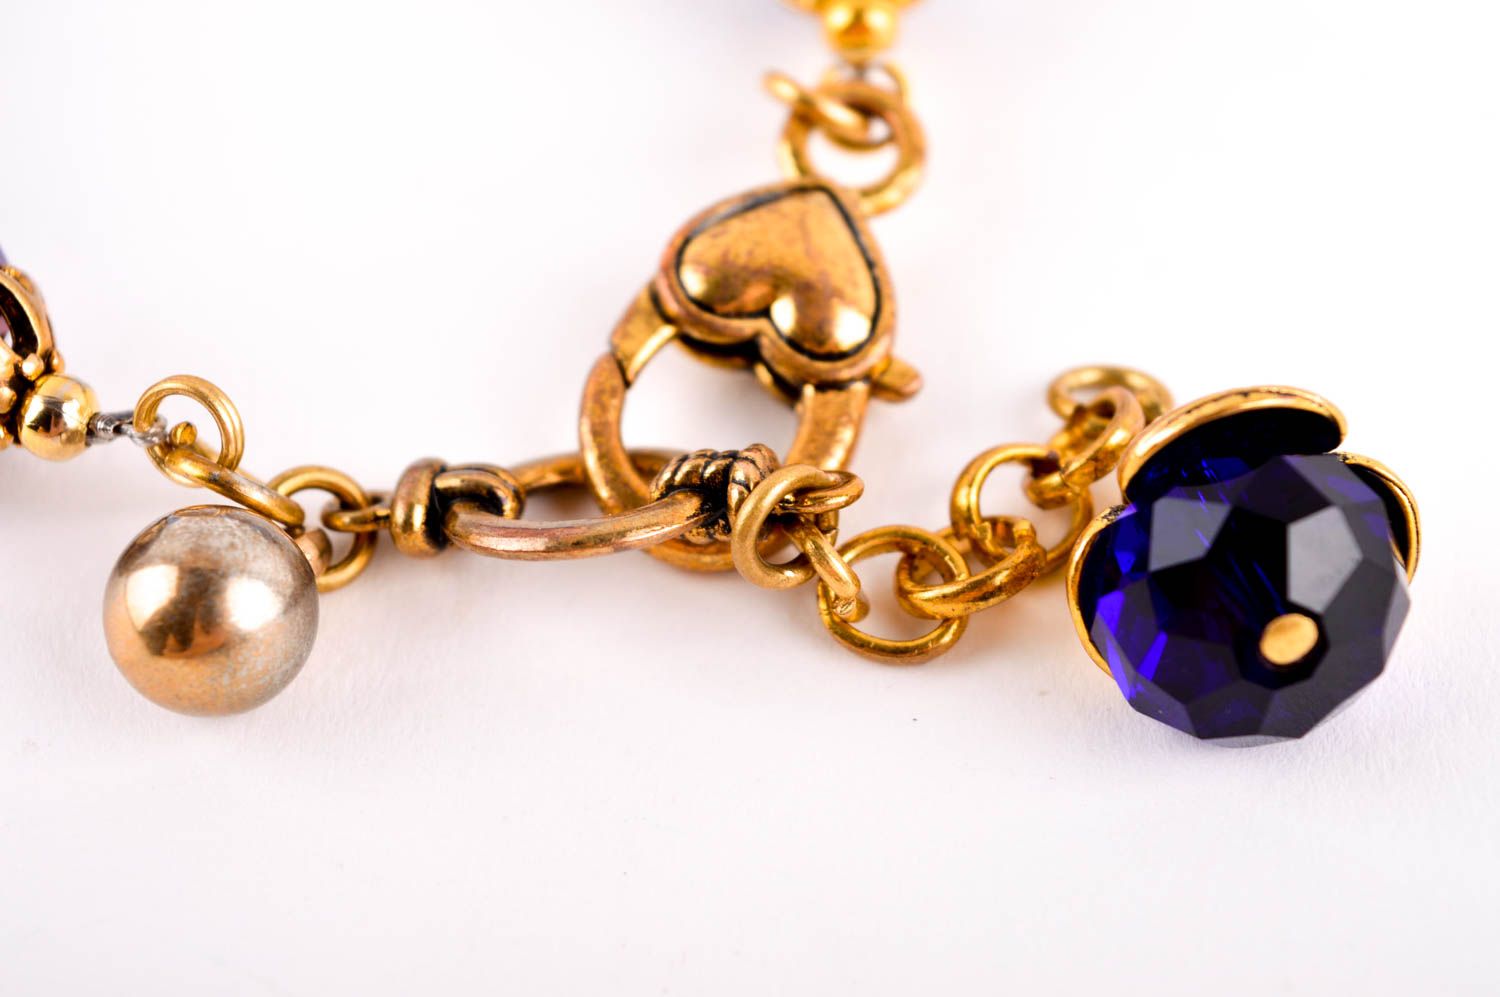 Handmade bracelet with natural stones jewelry stones designer fashion jewelry photo 3